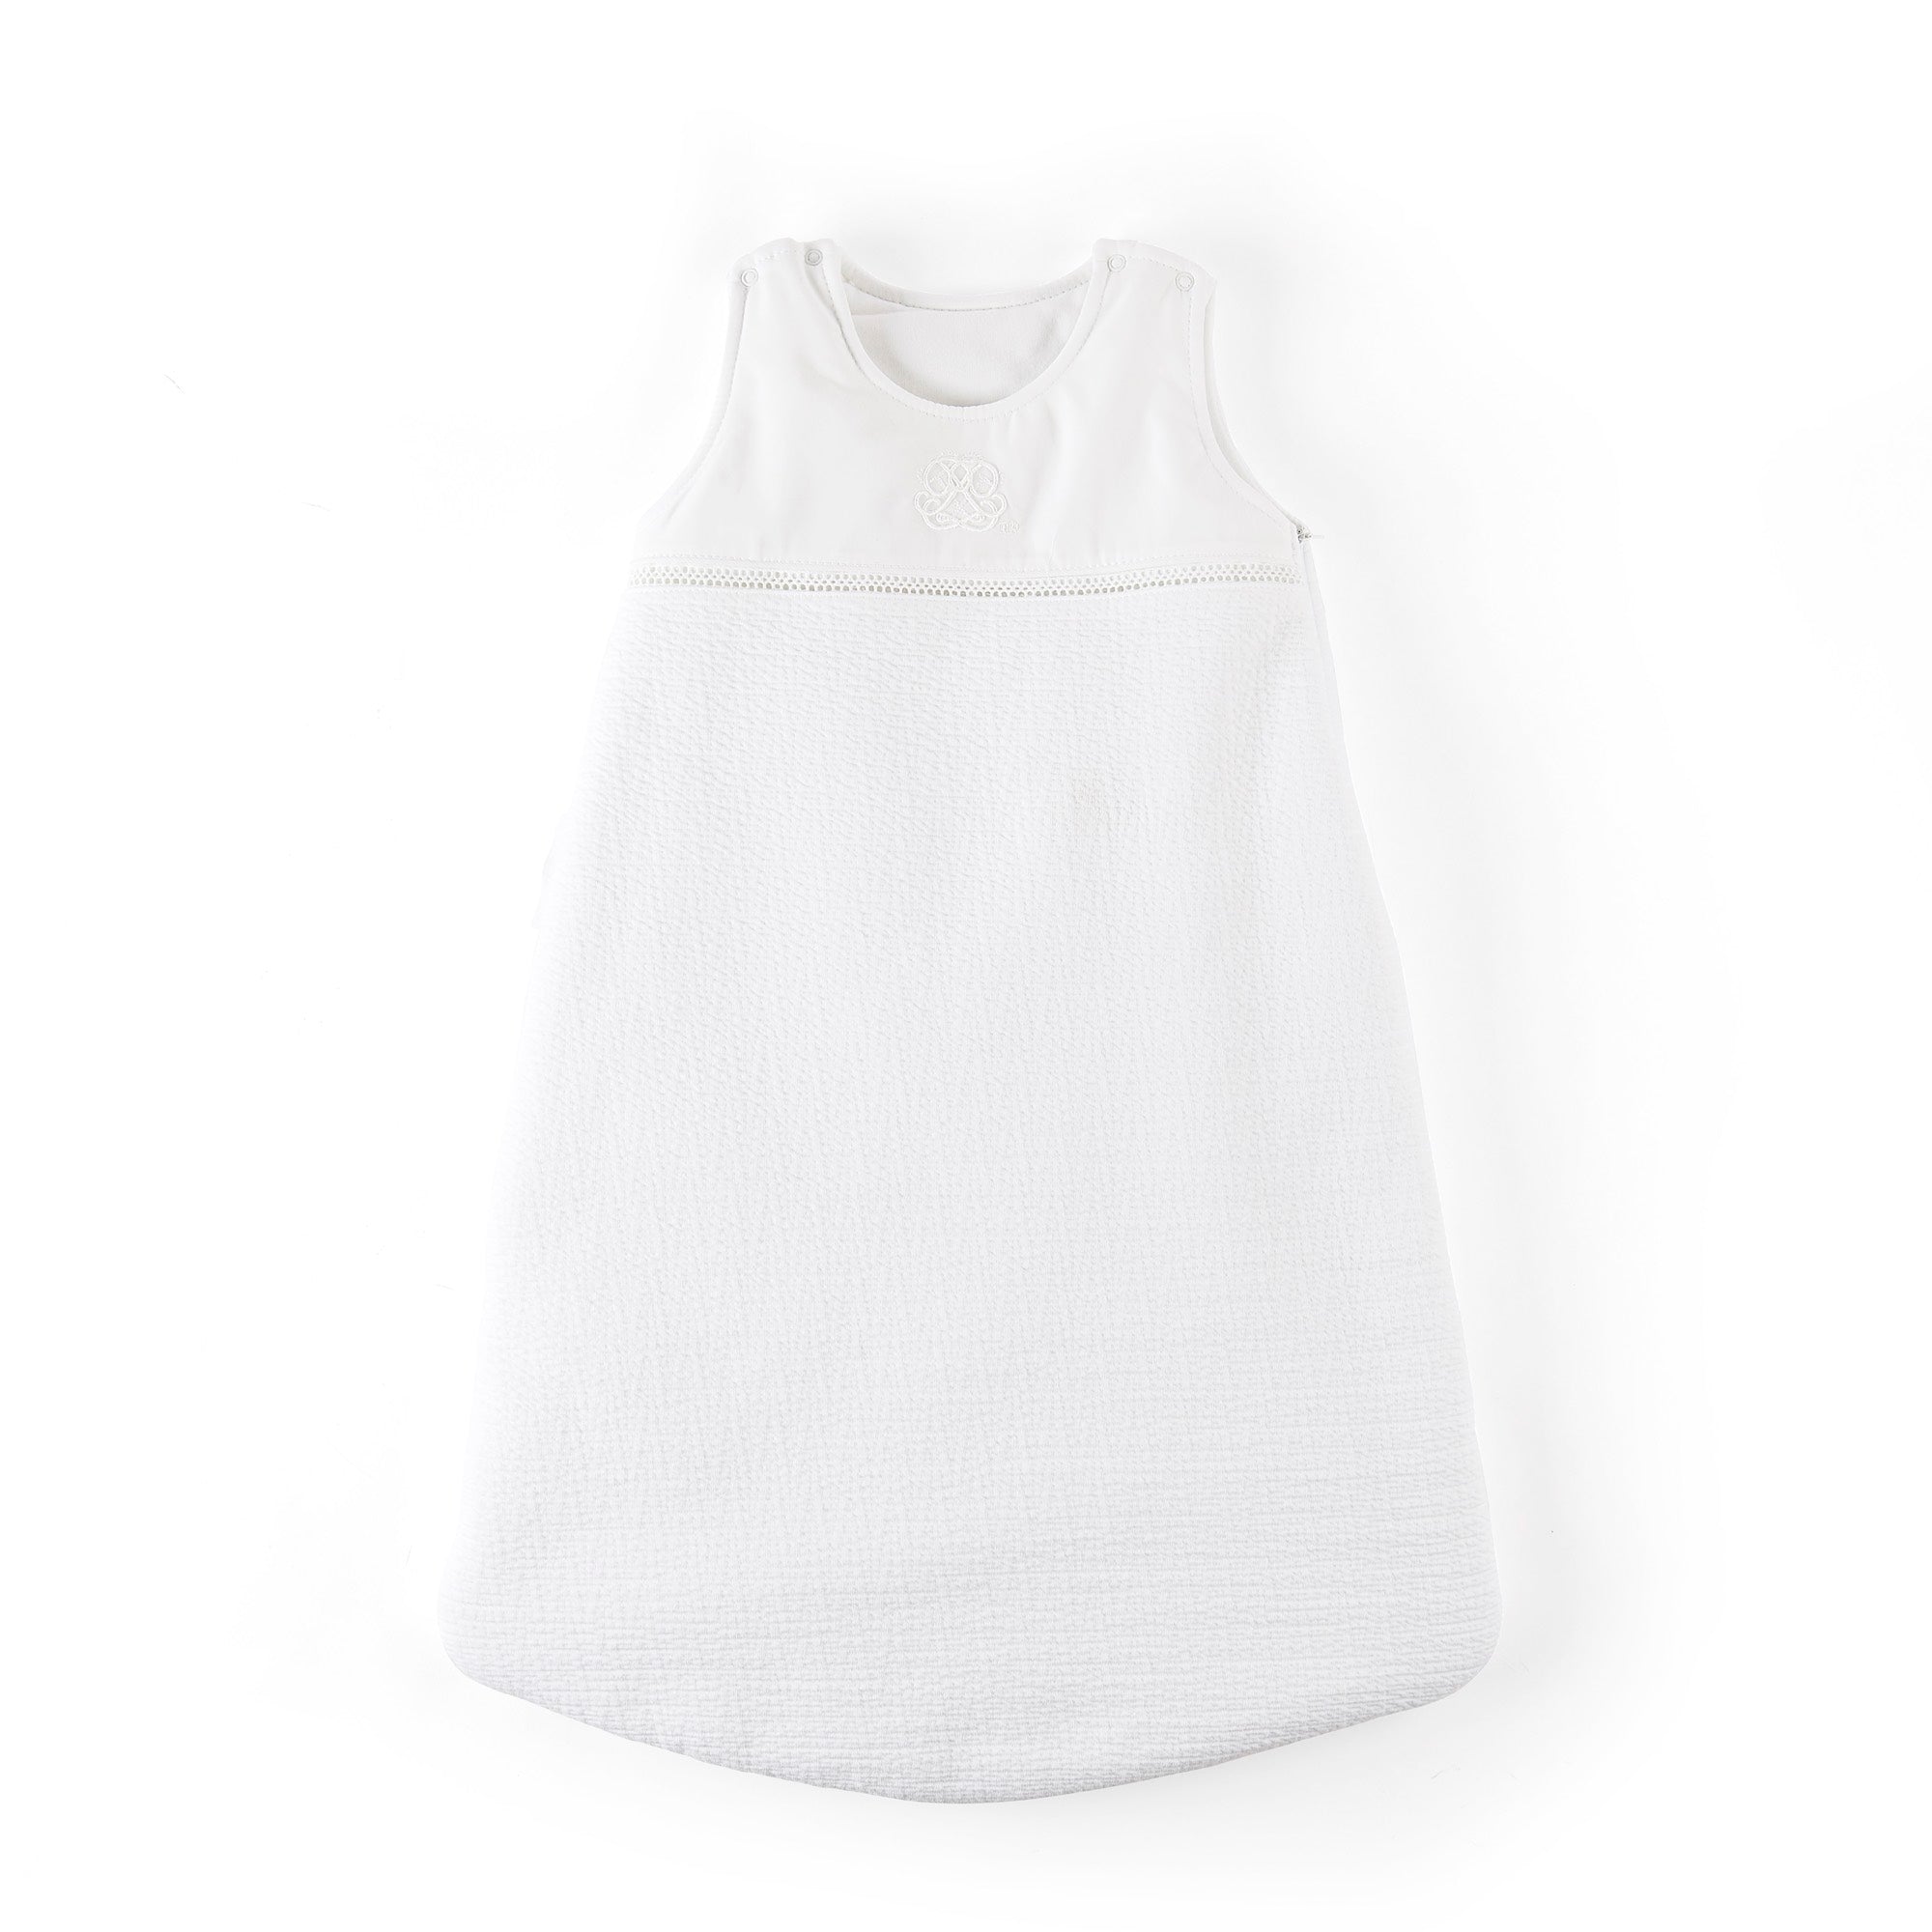 Theophile & Patachou Baby Sleeping Bag 70 cm - Cotton White